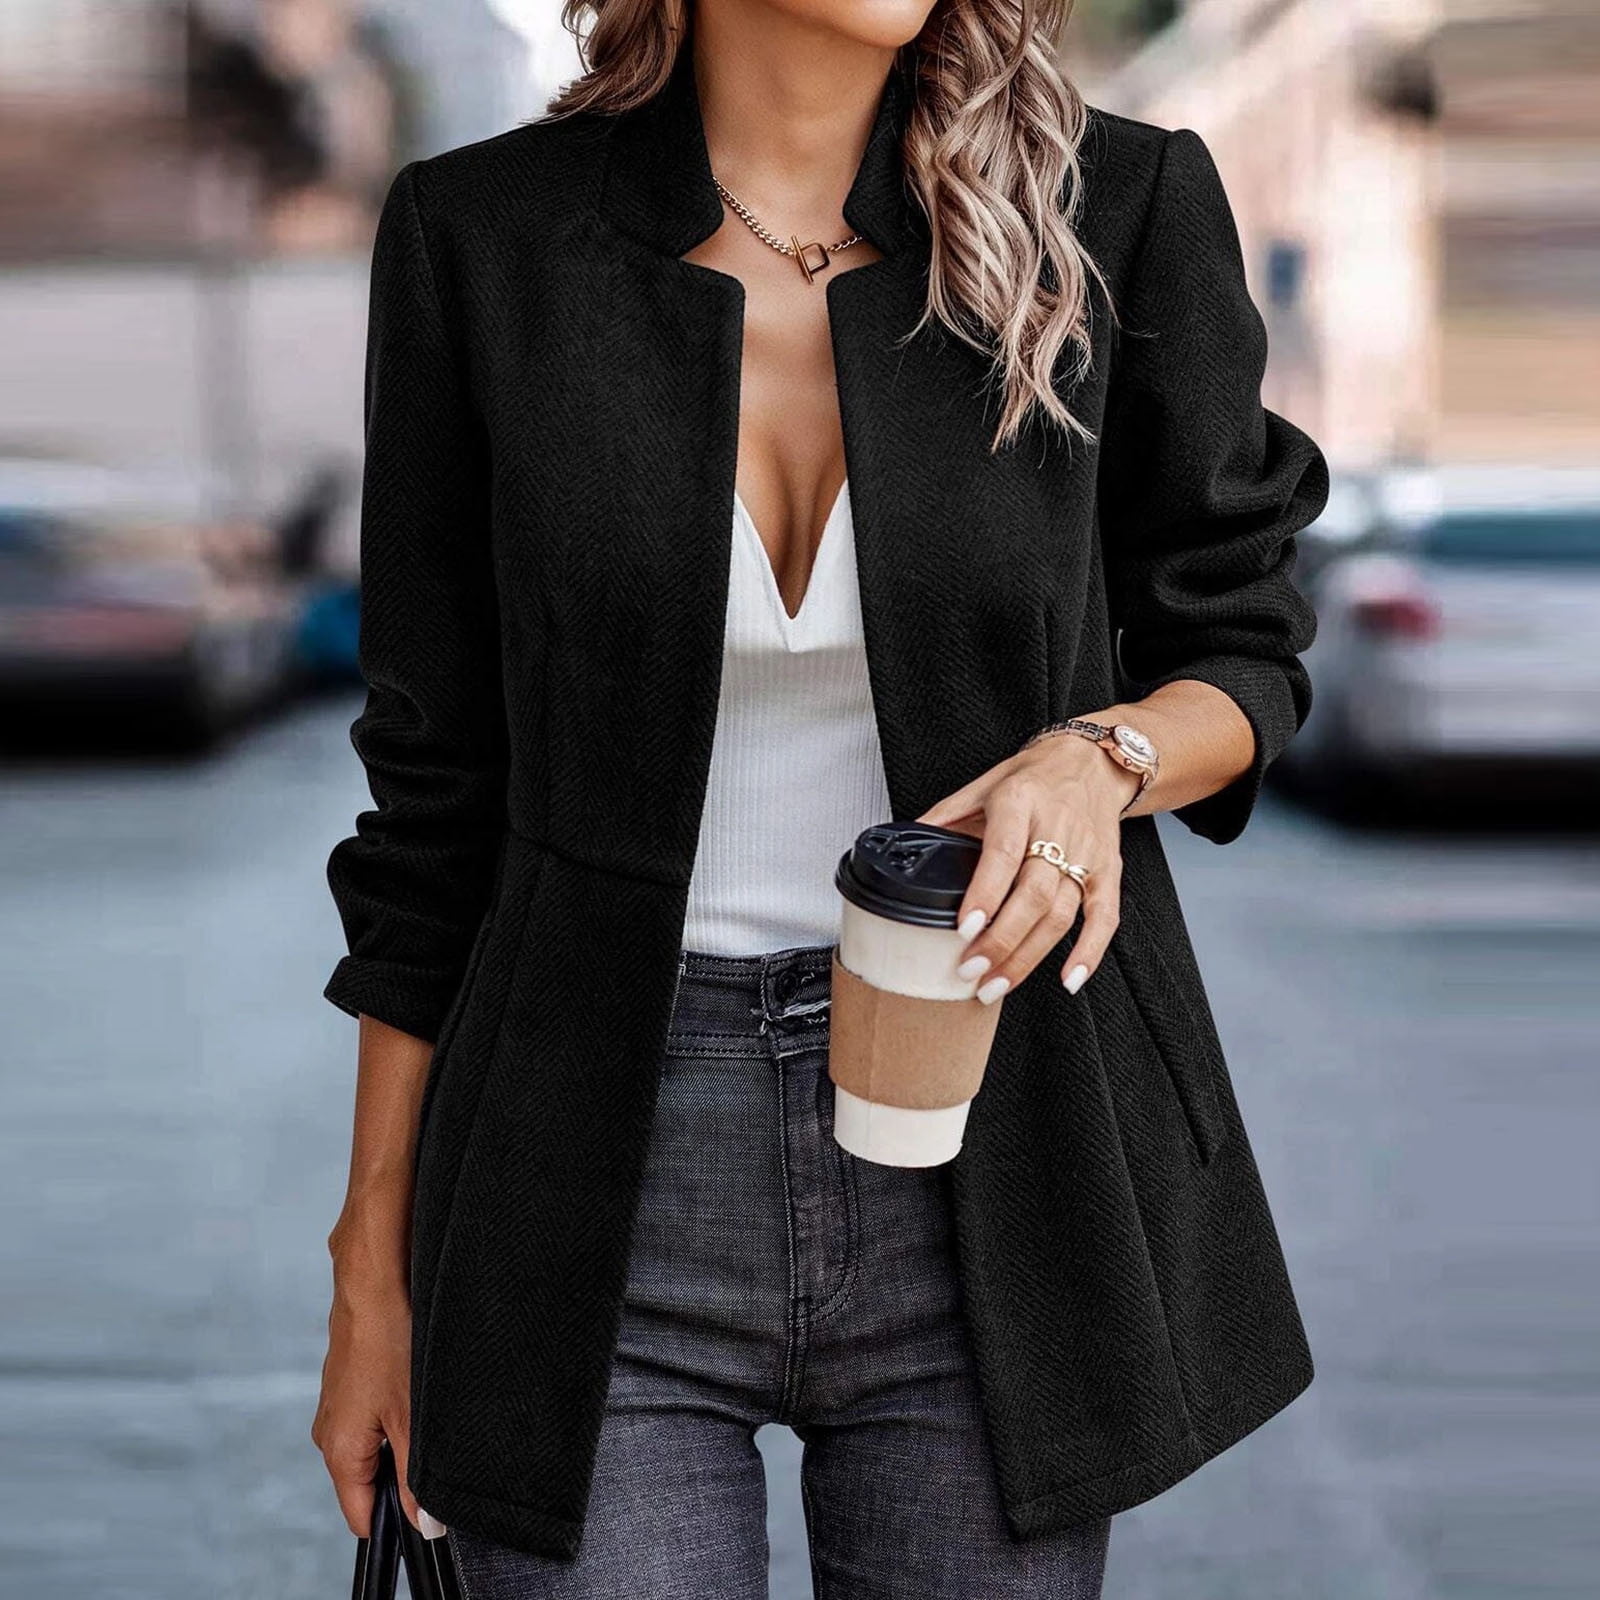 XFLWAM Womens Casual Blazers Open Front Long Sleeve Pad Shoulder Blazer  Work Office Pockets Jackets Hot Pink S 